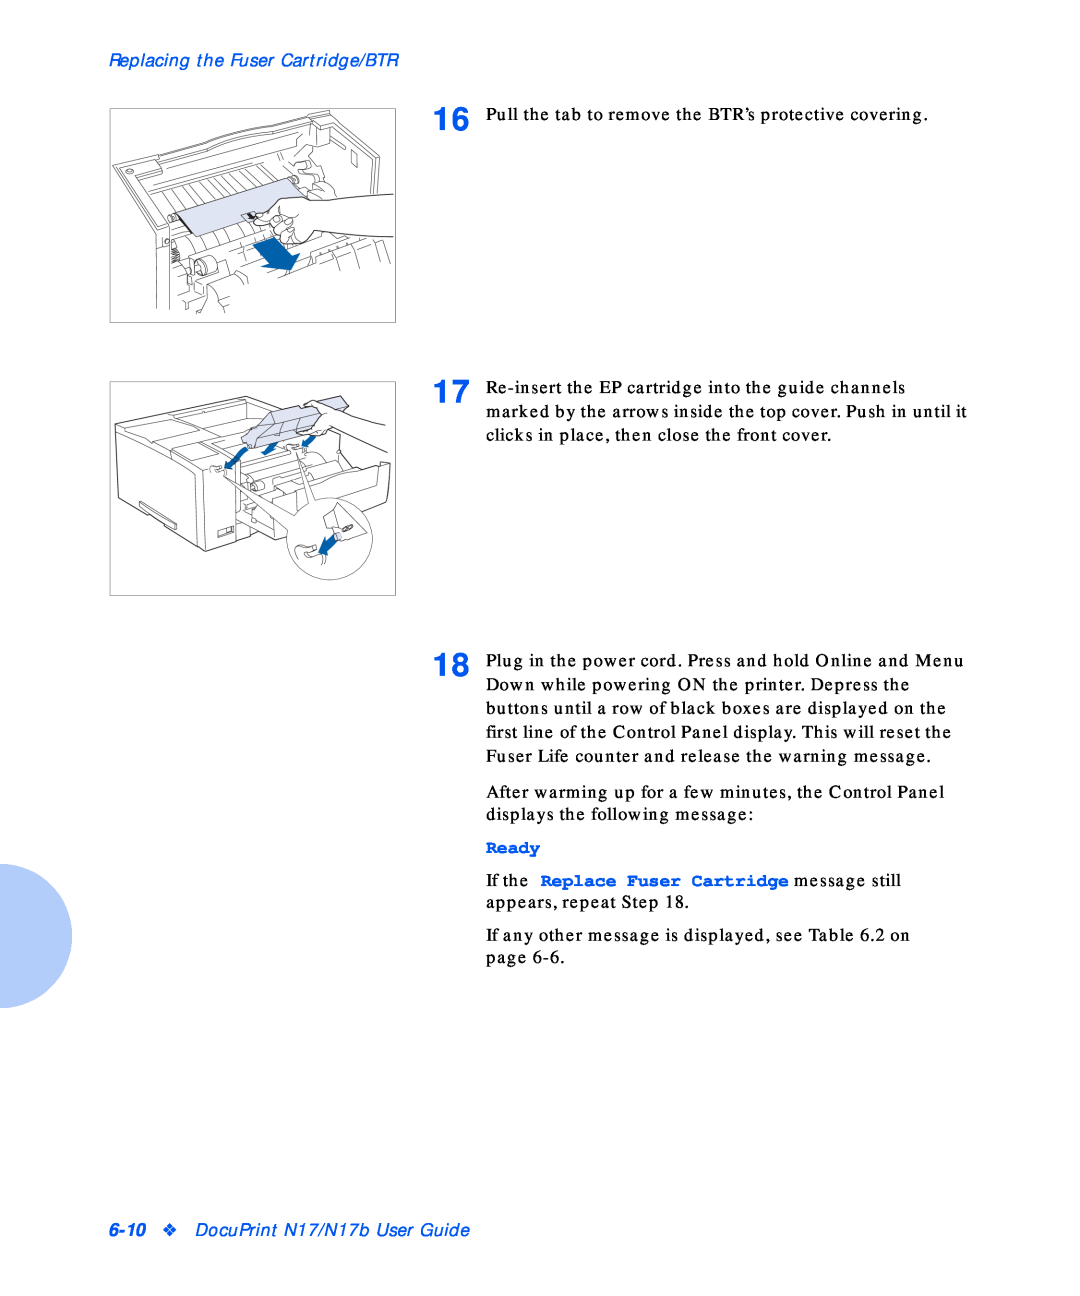 Xerox manual Replacing the Fuser Cartridge/BTR, Ready, DocuPrint N17/N17b User Guide 